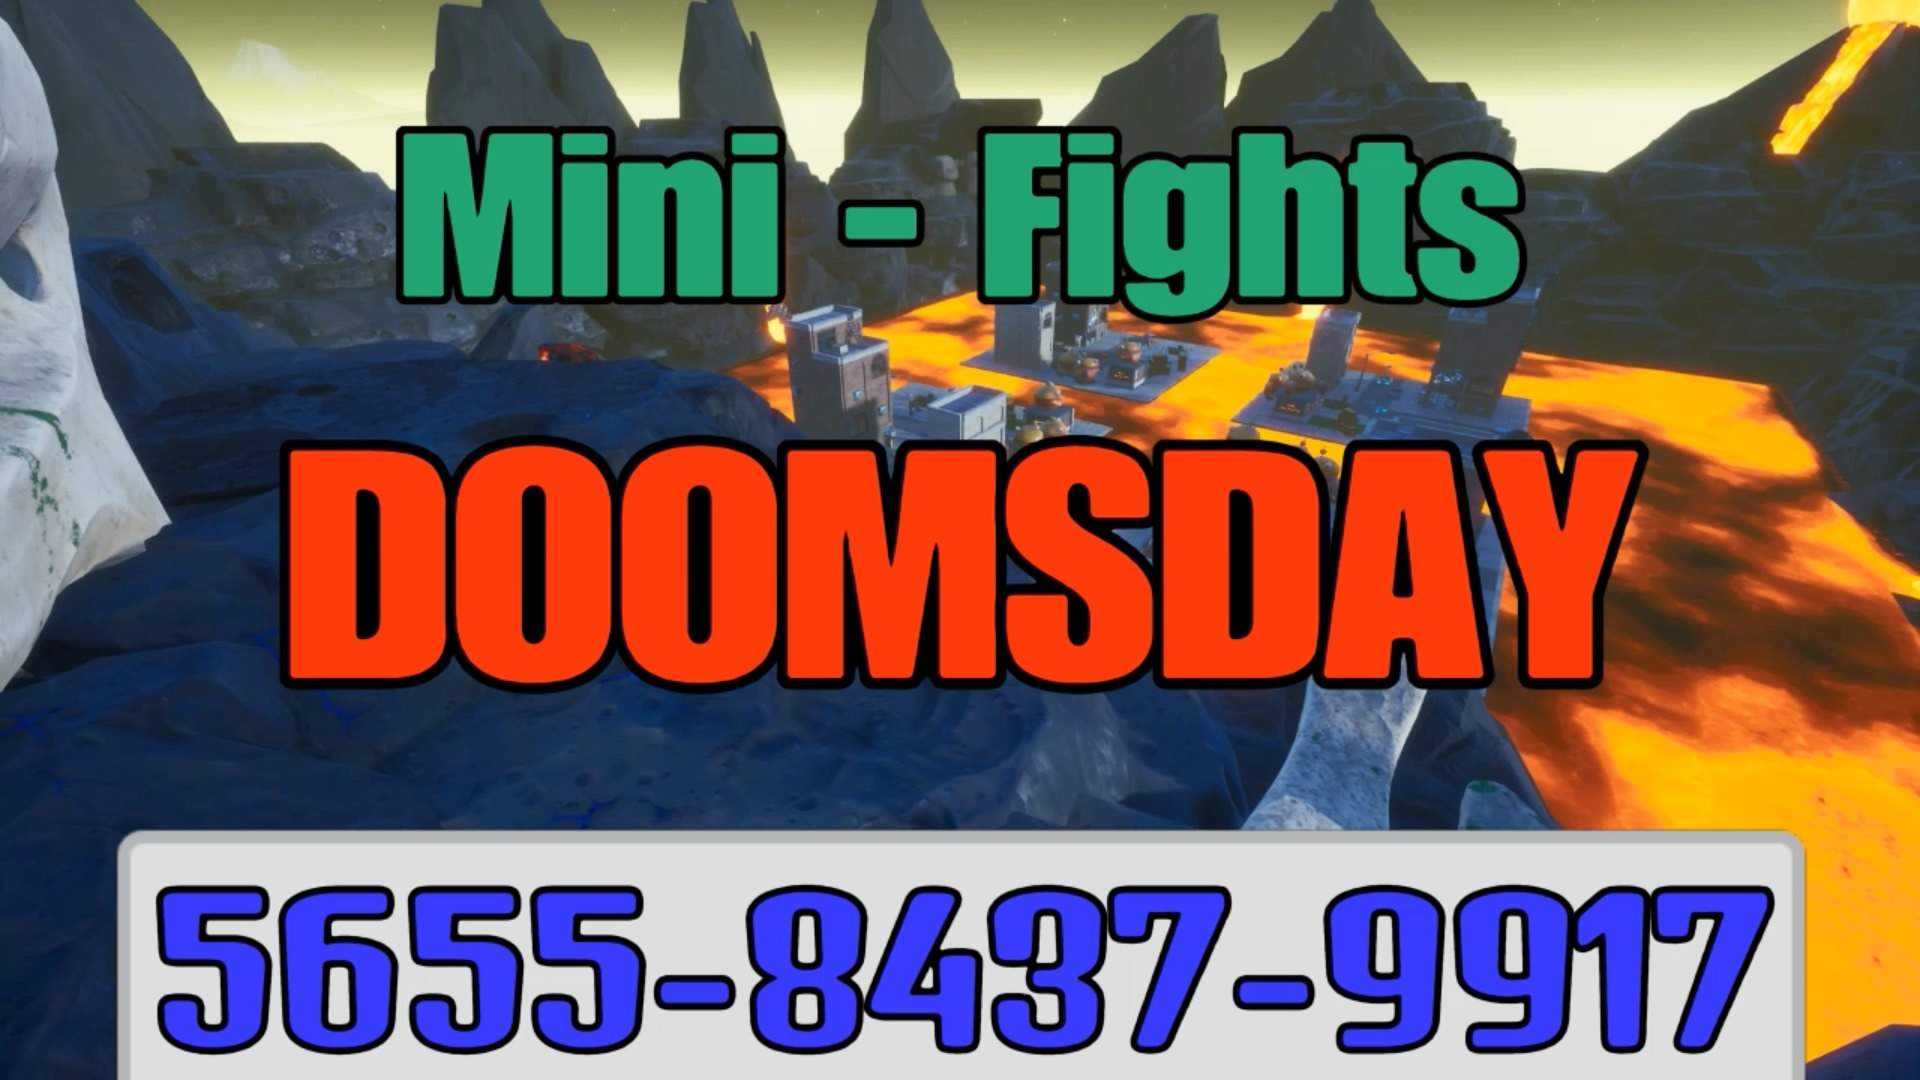 MINI-FIGHTS: DOOMSDAY